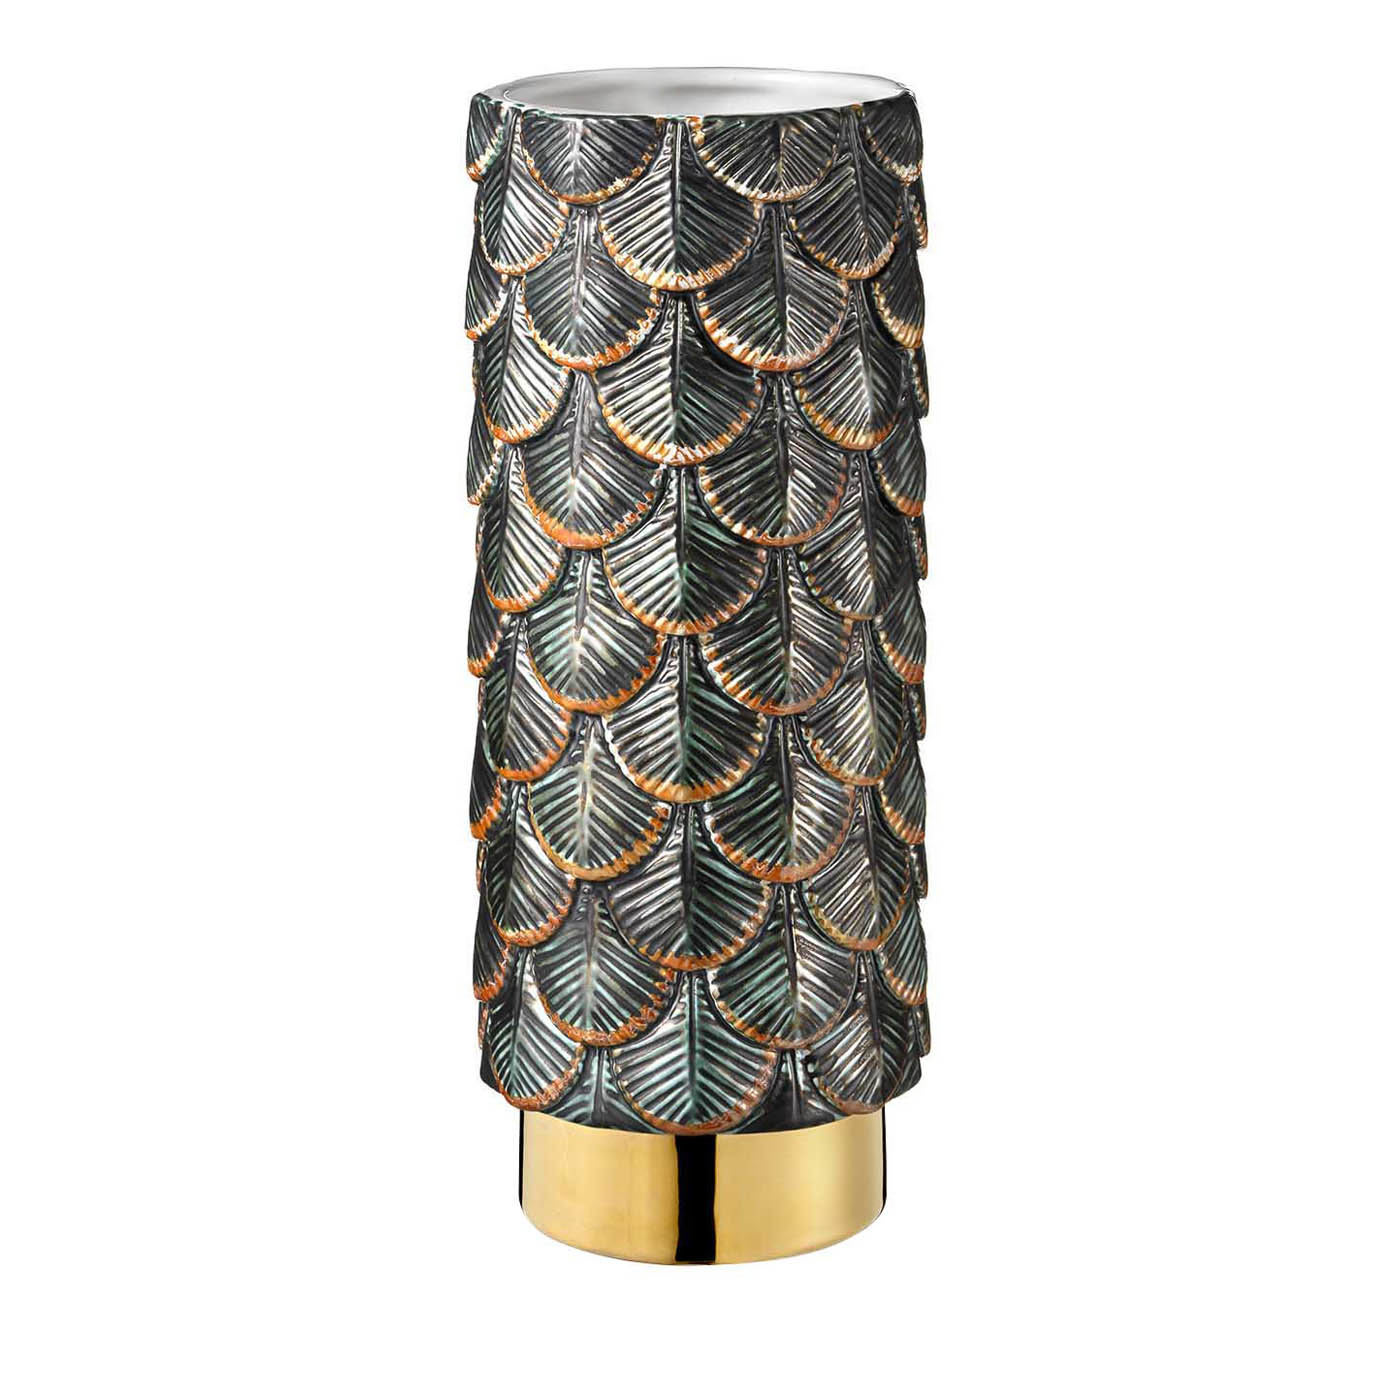 Silver Plumage Vase with 24K Gold - Botteganove